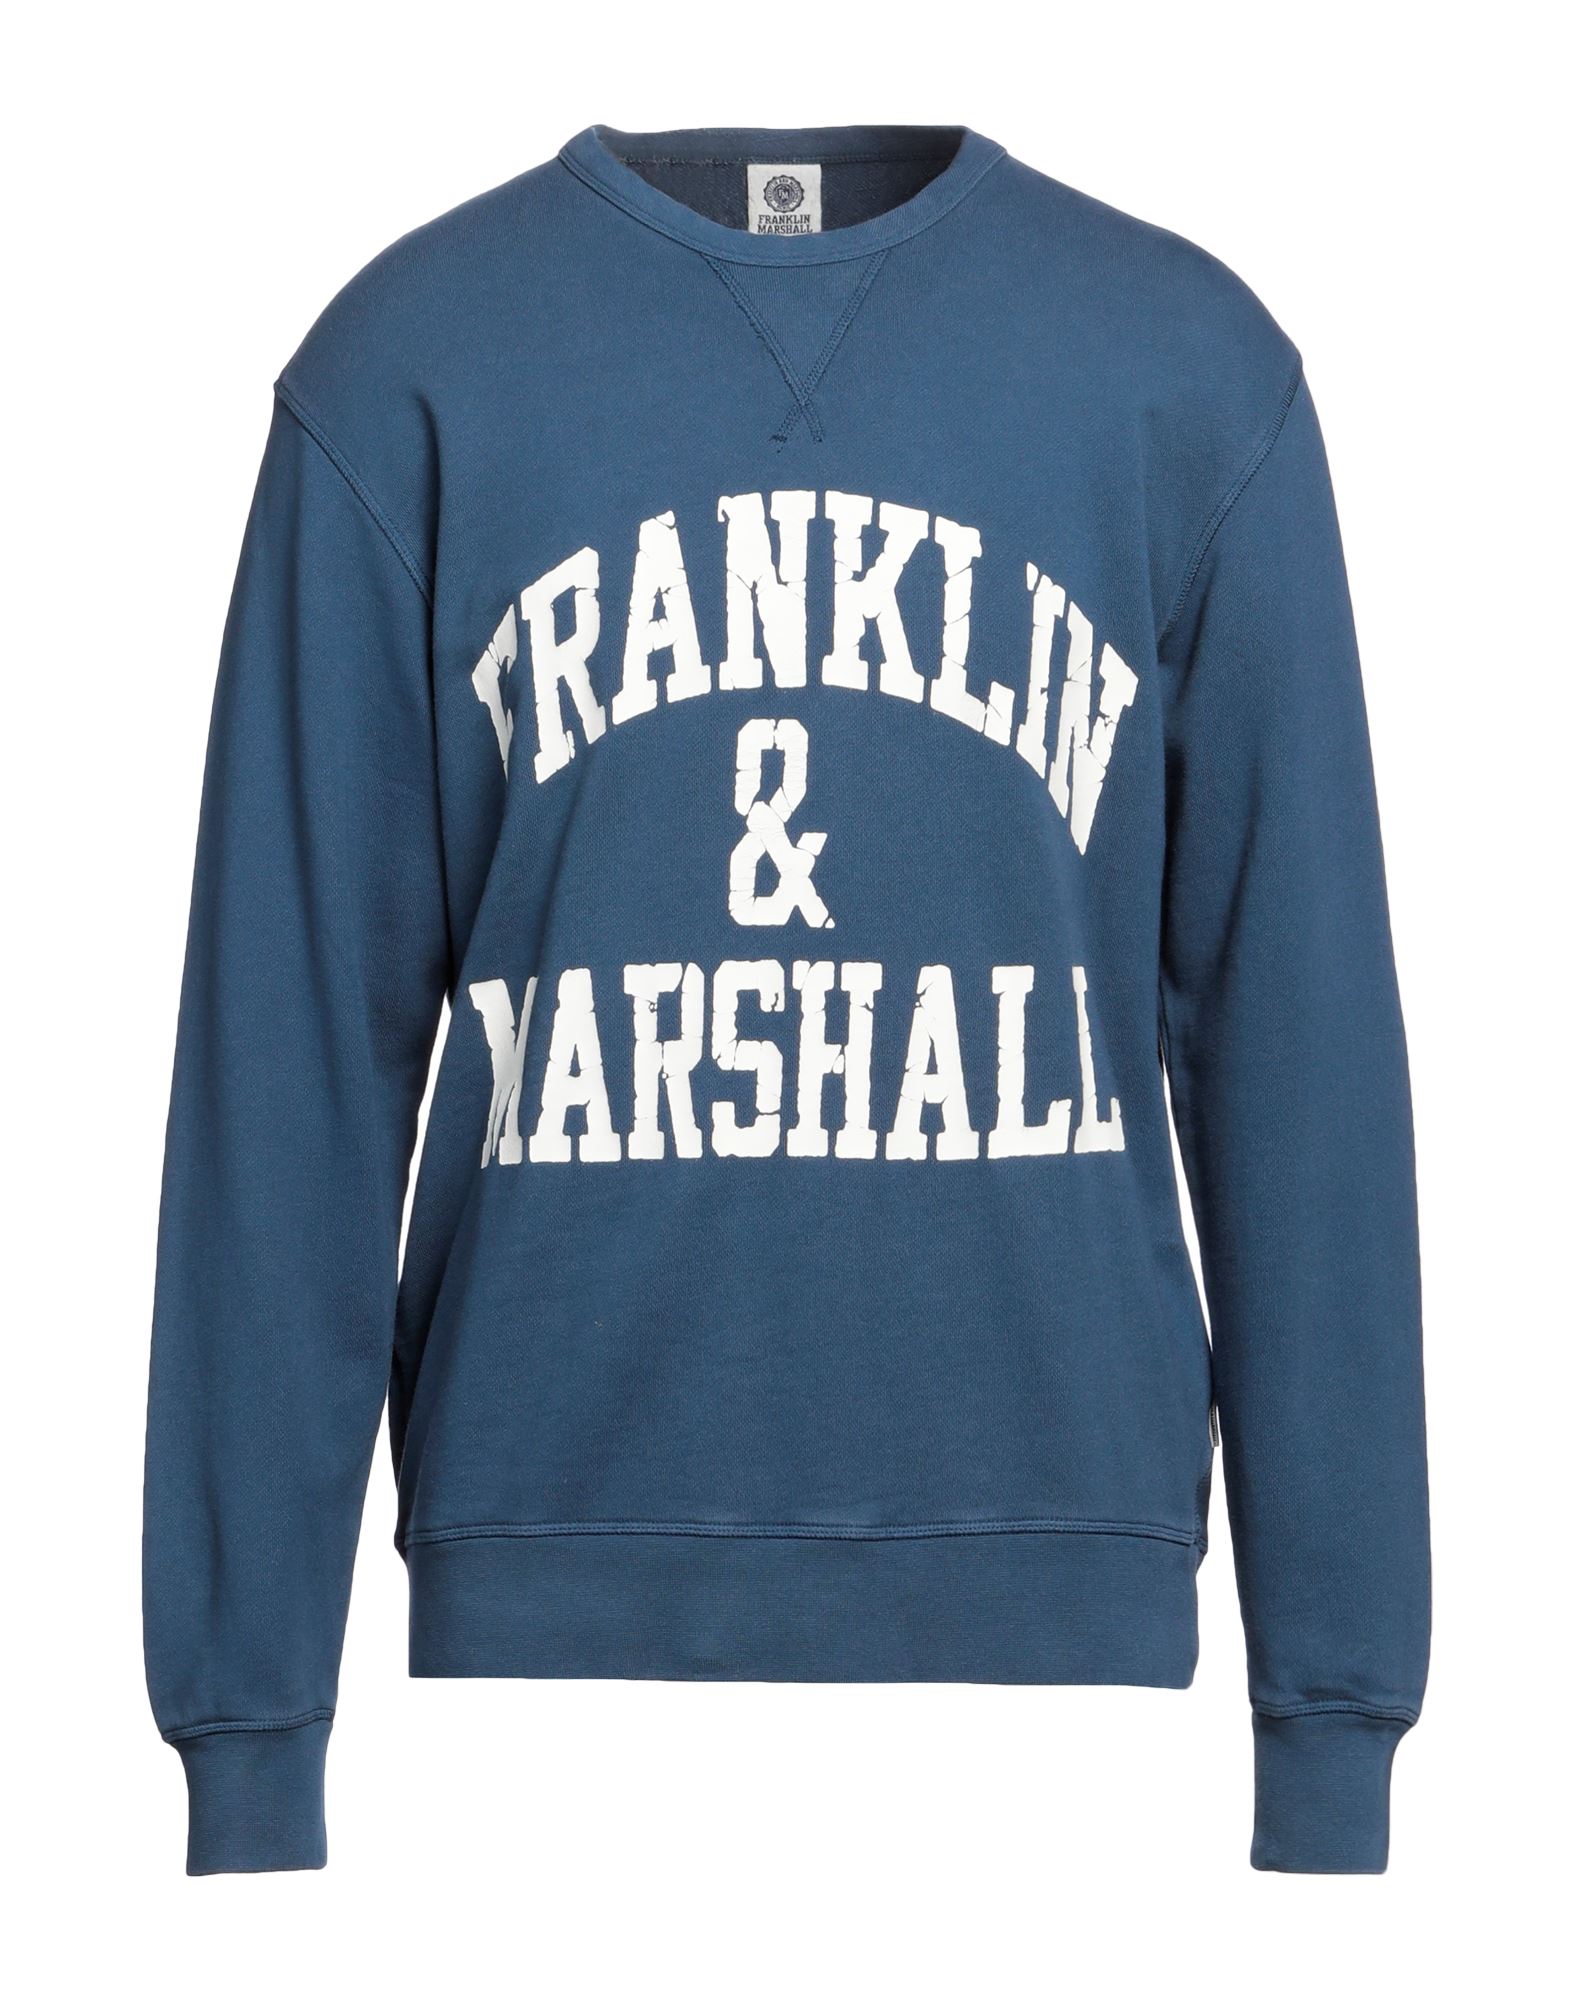 FRANKLIN & MARSHALL Sweatshirt Herren Blaugrau von FRANKLIN & MARSHALL